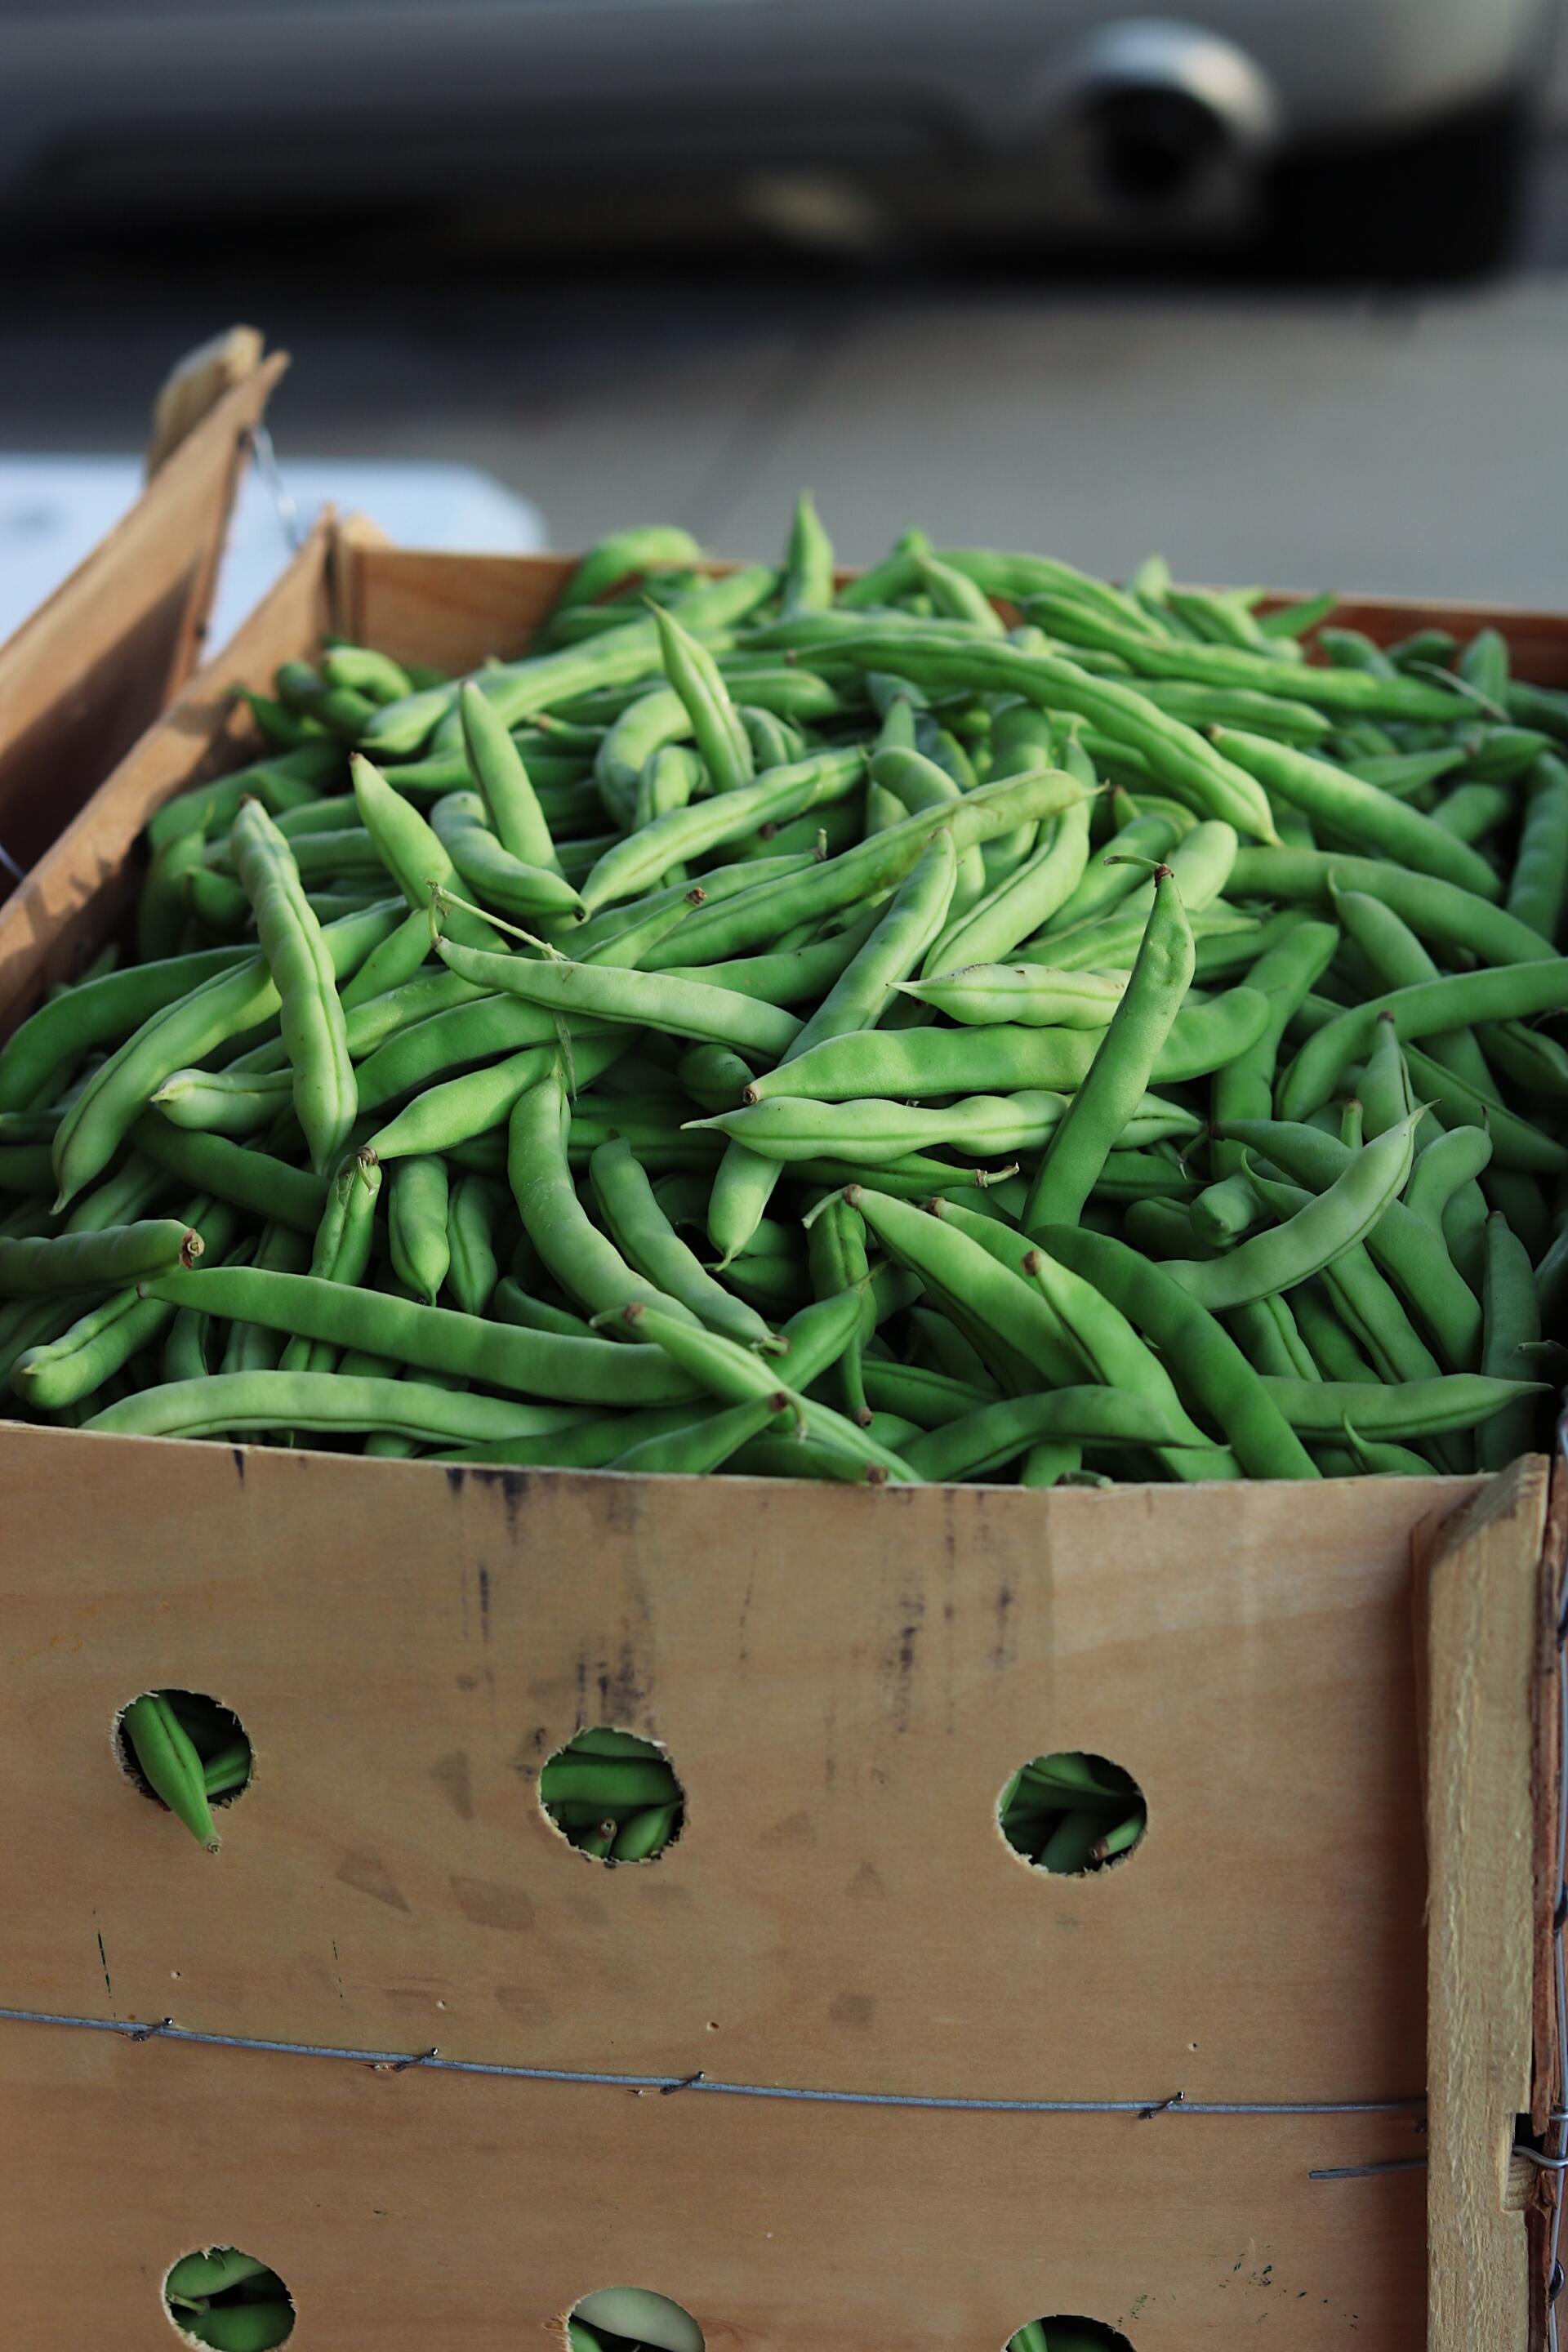 A cardboard box full of green beans